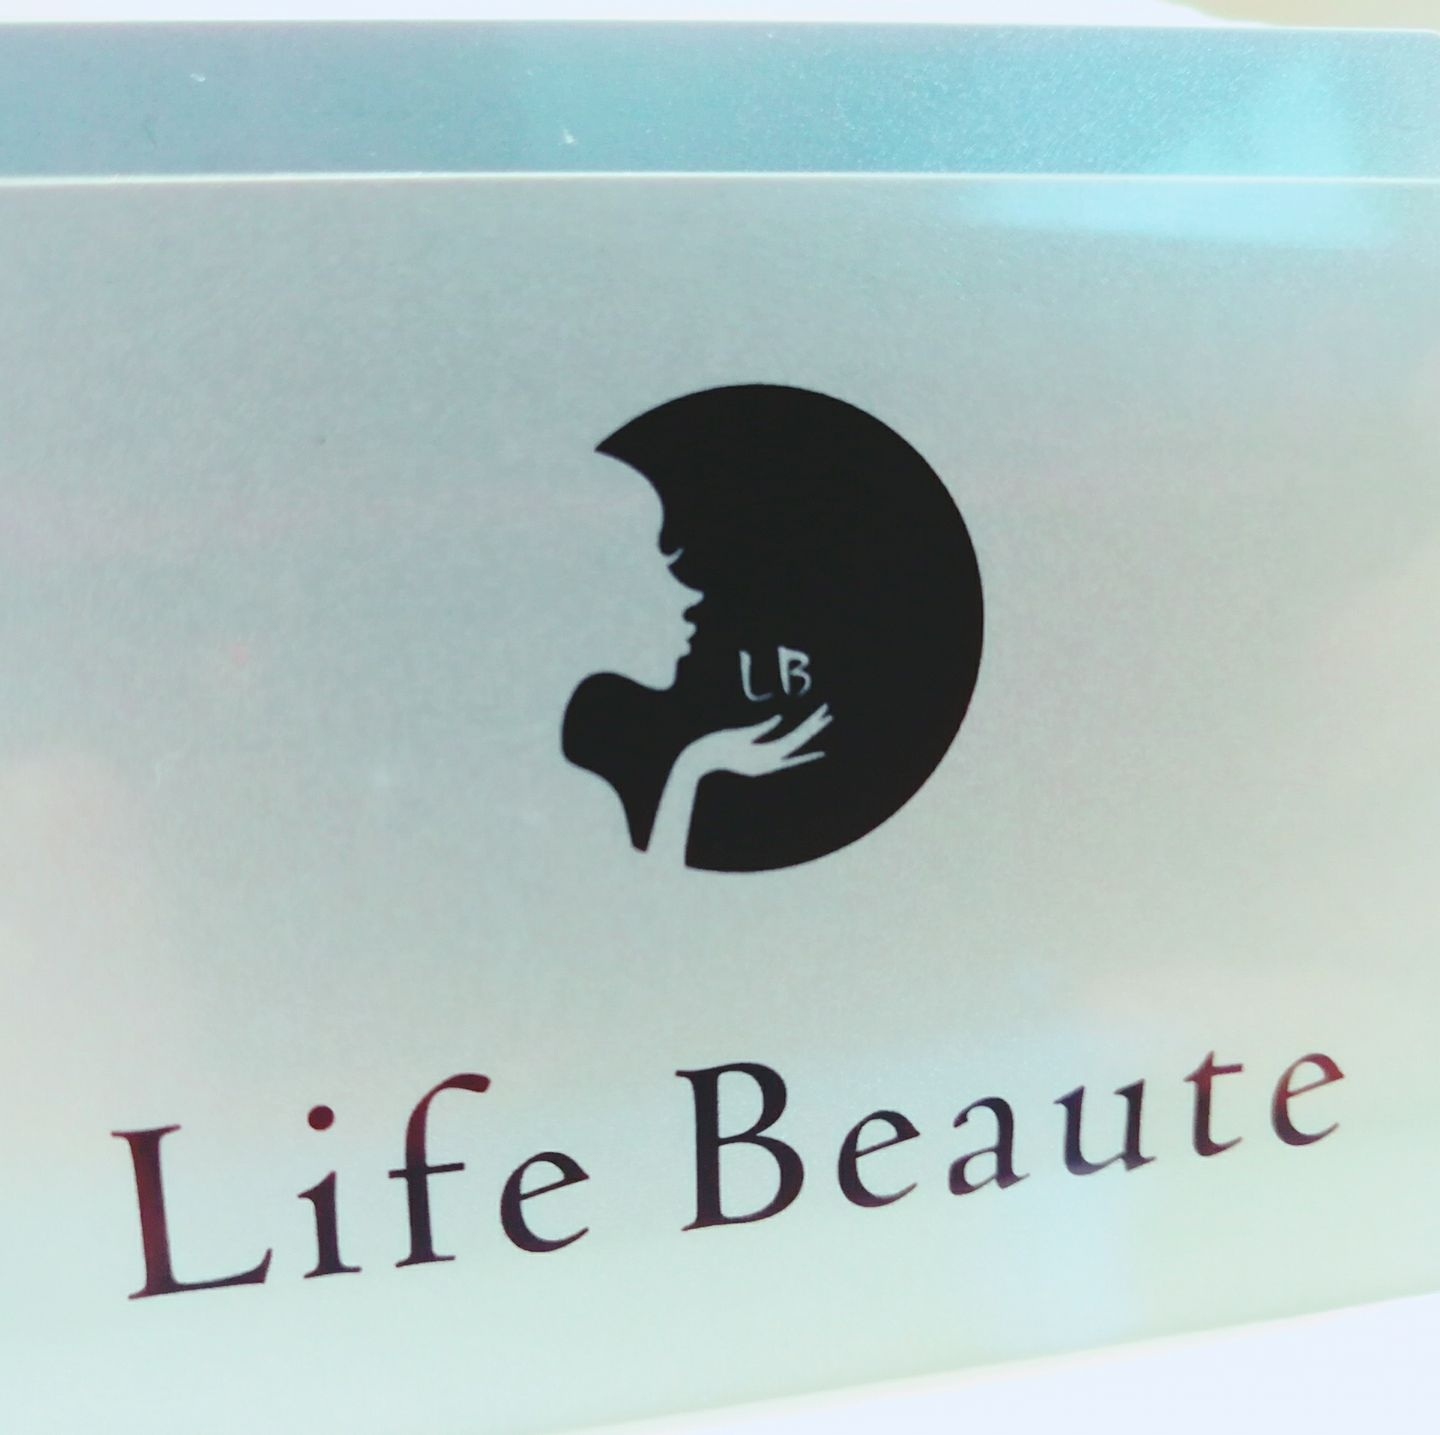 香港美容網 Hong Kong Beauty Salon 美容院 / 美容師: Life Beaute